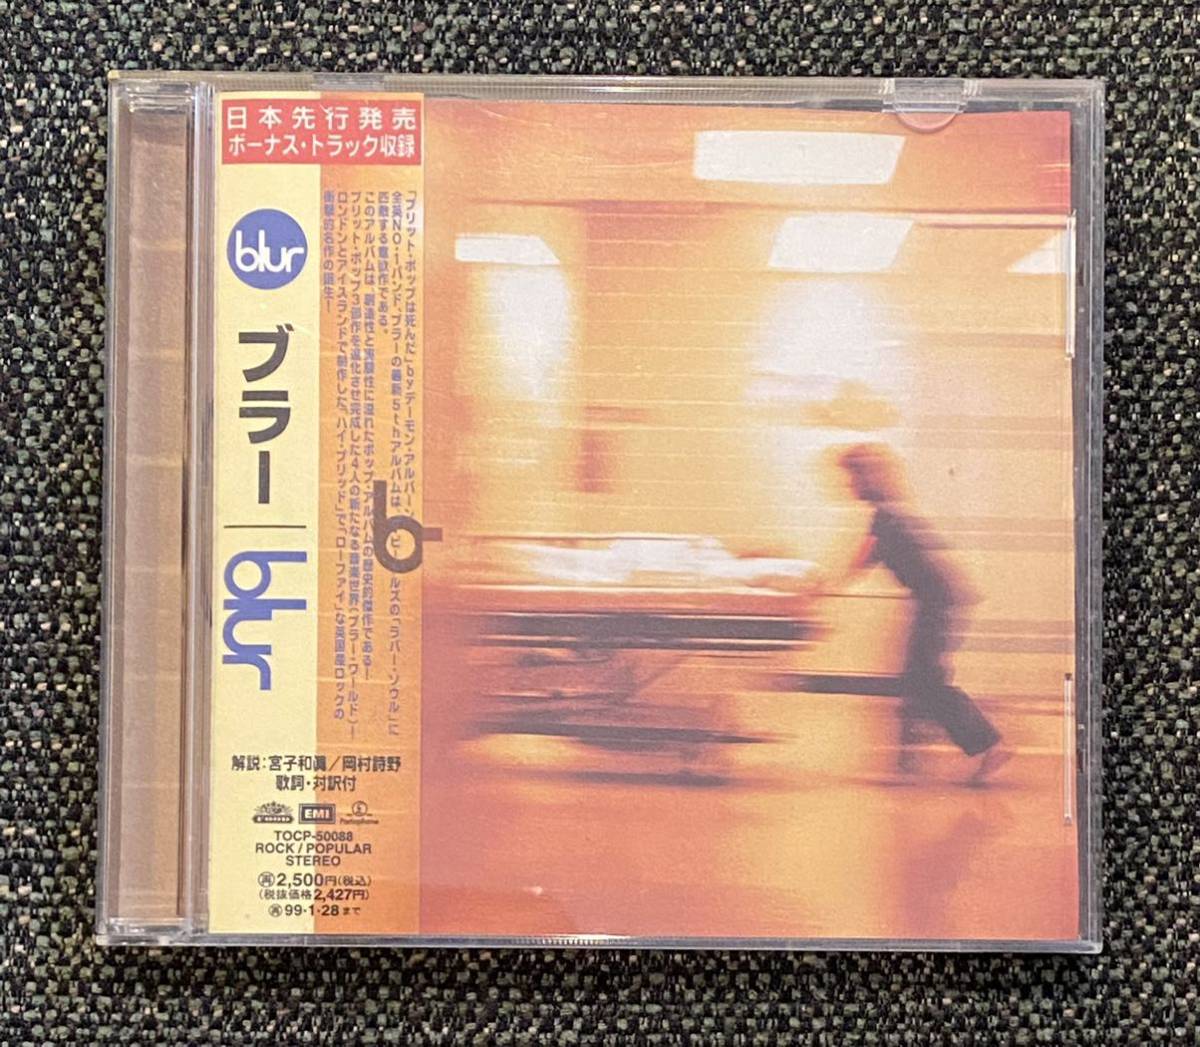 blur 帯付CD TOCP-50088 ブラー_画像1